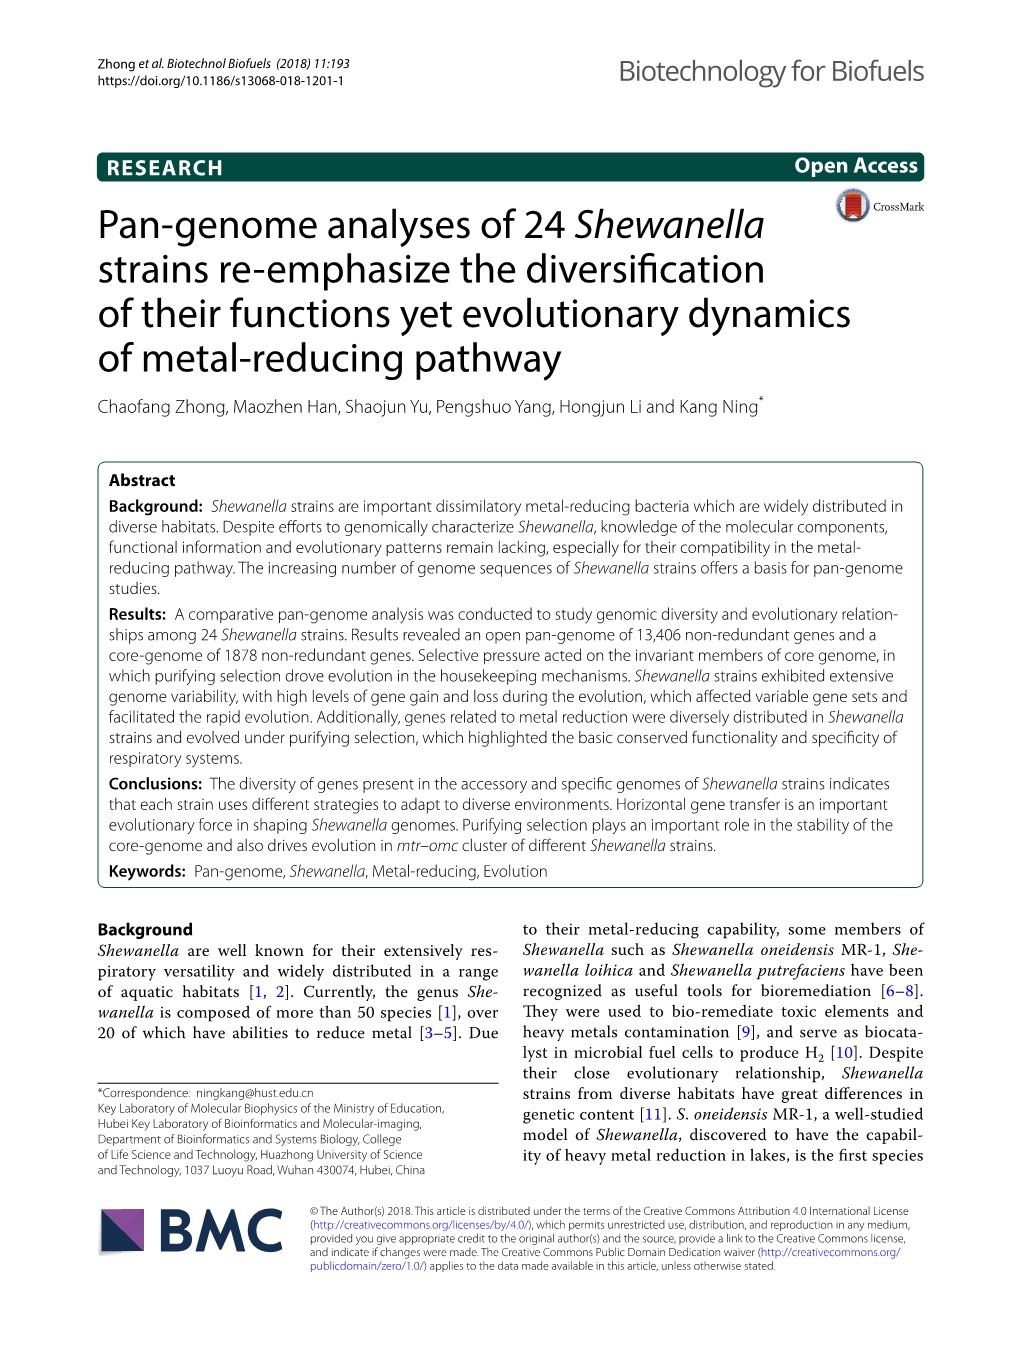 Pan-Genome Analyses of 24 Shewanella Strains Re-Emphasize